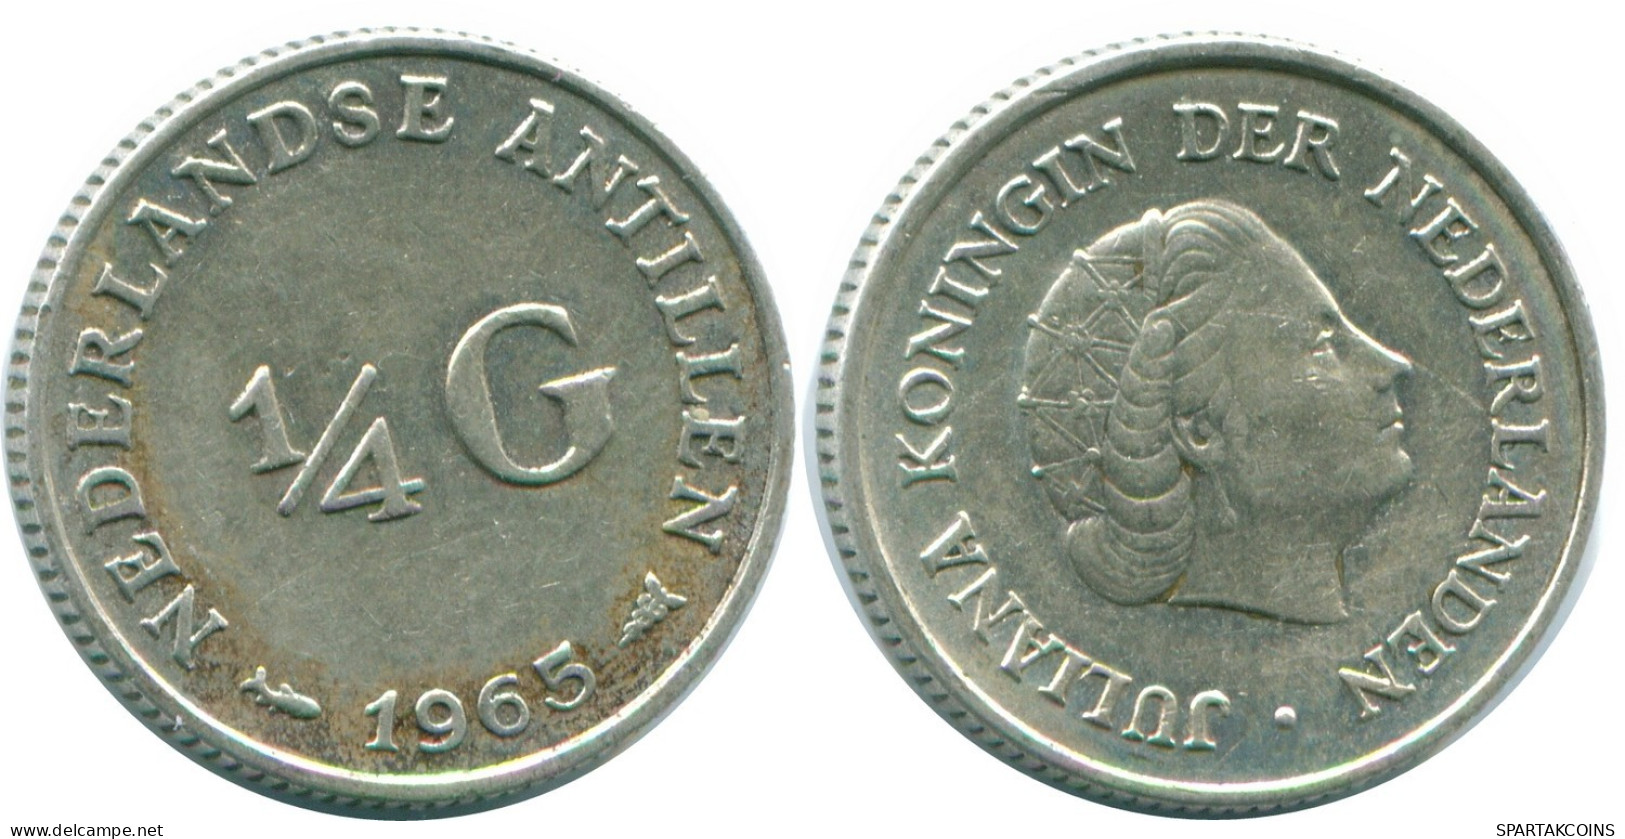 1/4 GULDEN 1965 NETHERLANDS ANTILLES SILVER Colonial Coin #NL11270.4.U.A - Antille Olandesi